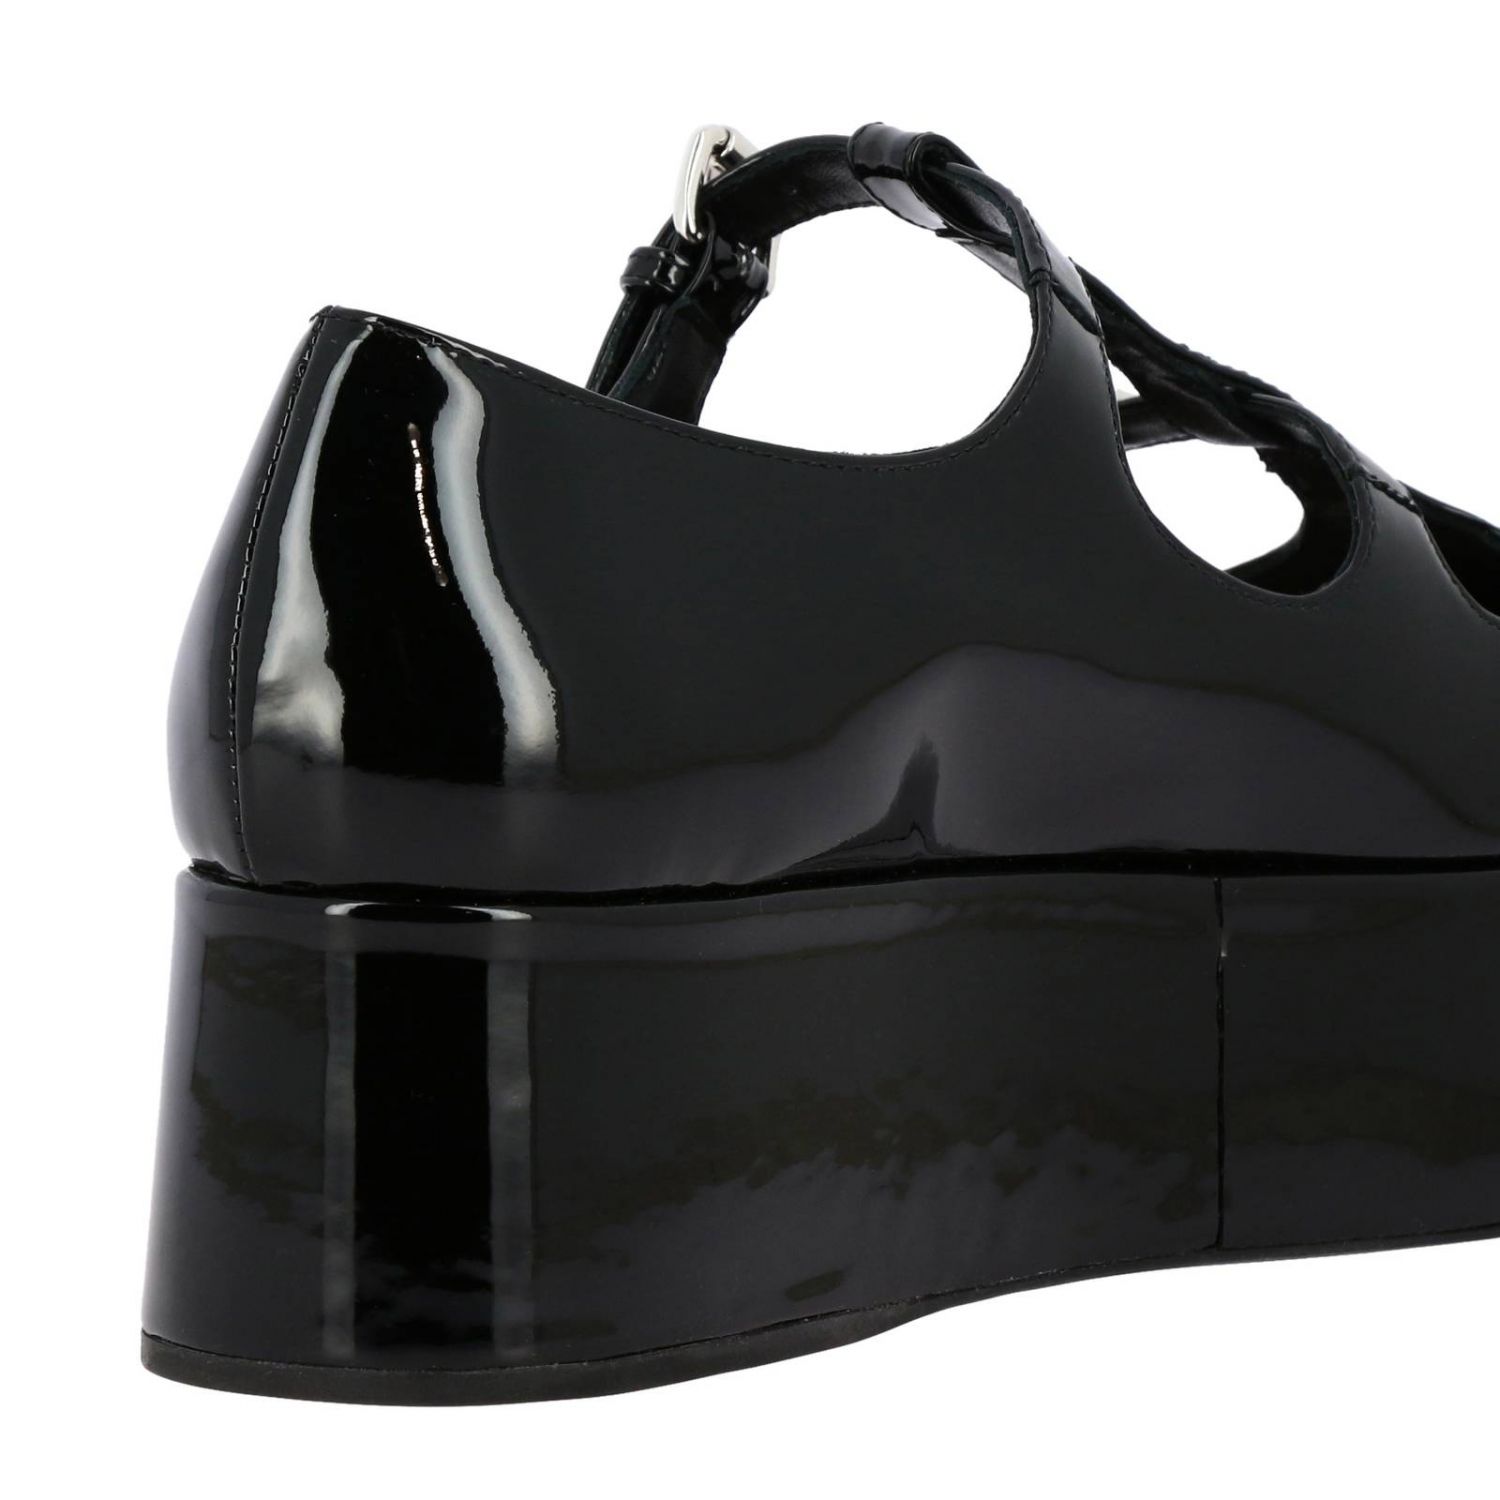 Wedge shoes Miu Miu: Miu Miu platform ballet flats in patent leather black 4